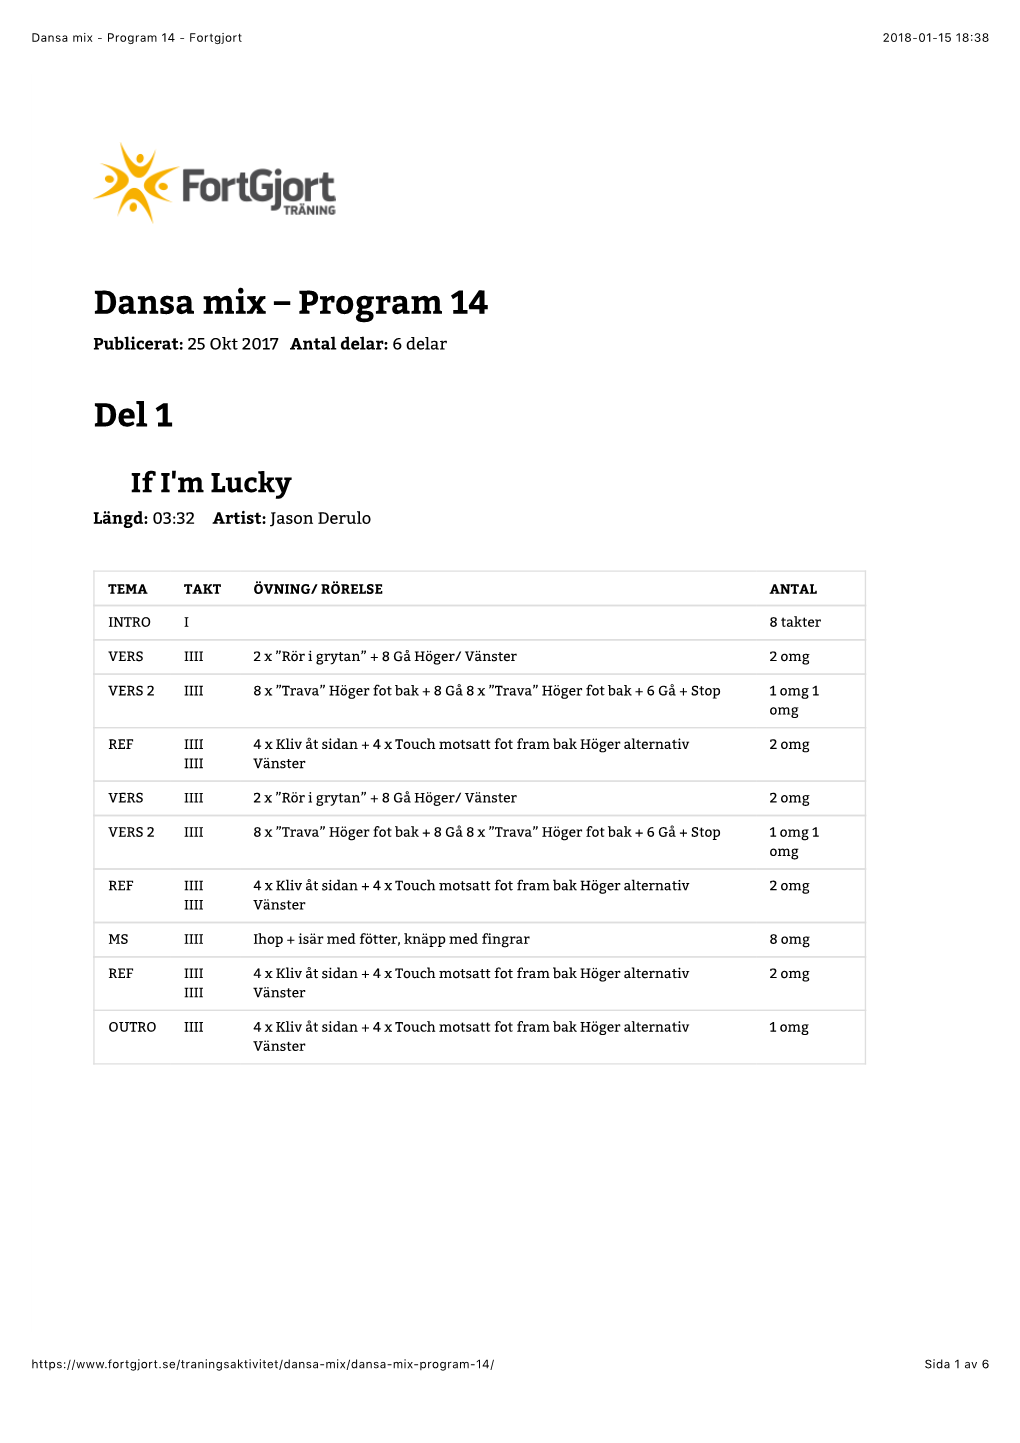 Dansa Mix - Program 14 - Fortgjort 2018-01-15 18:38